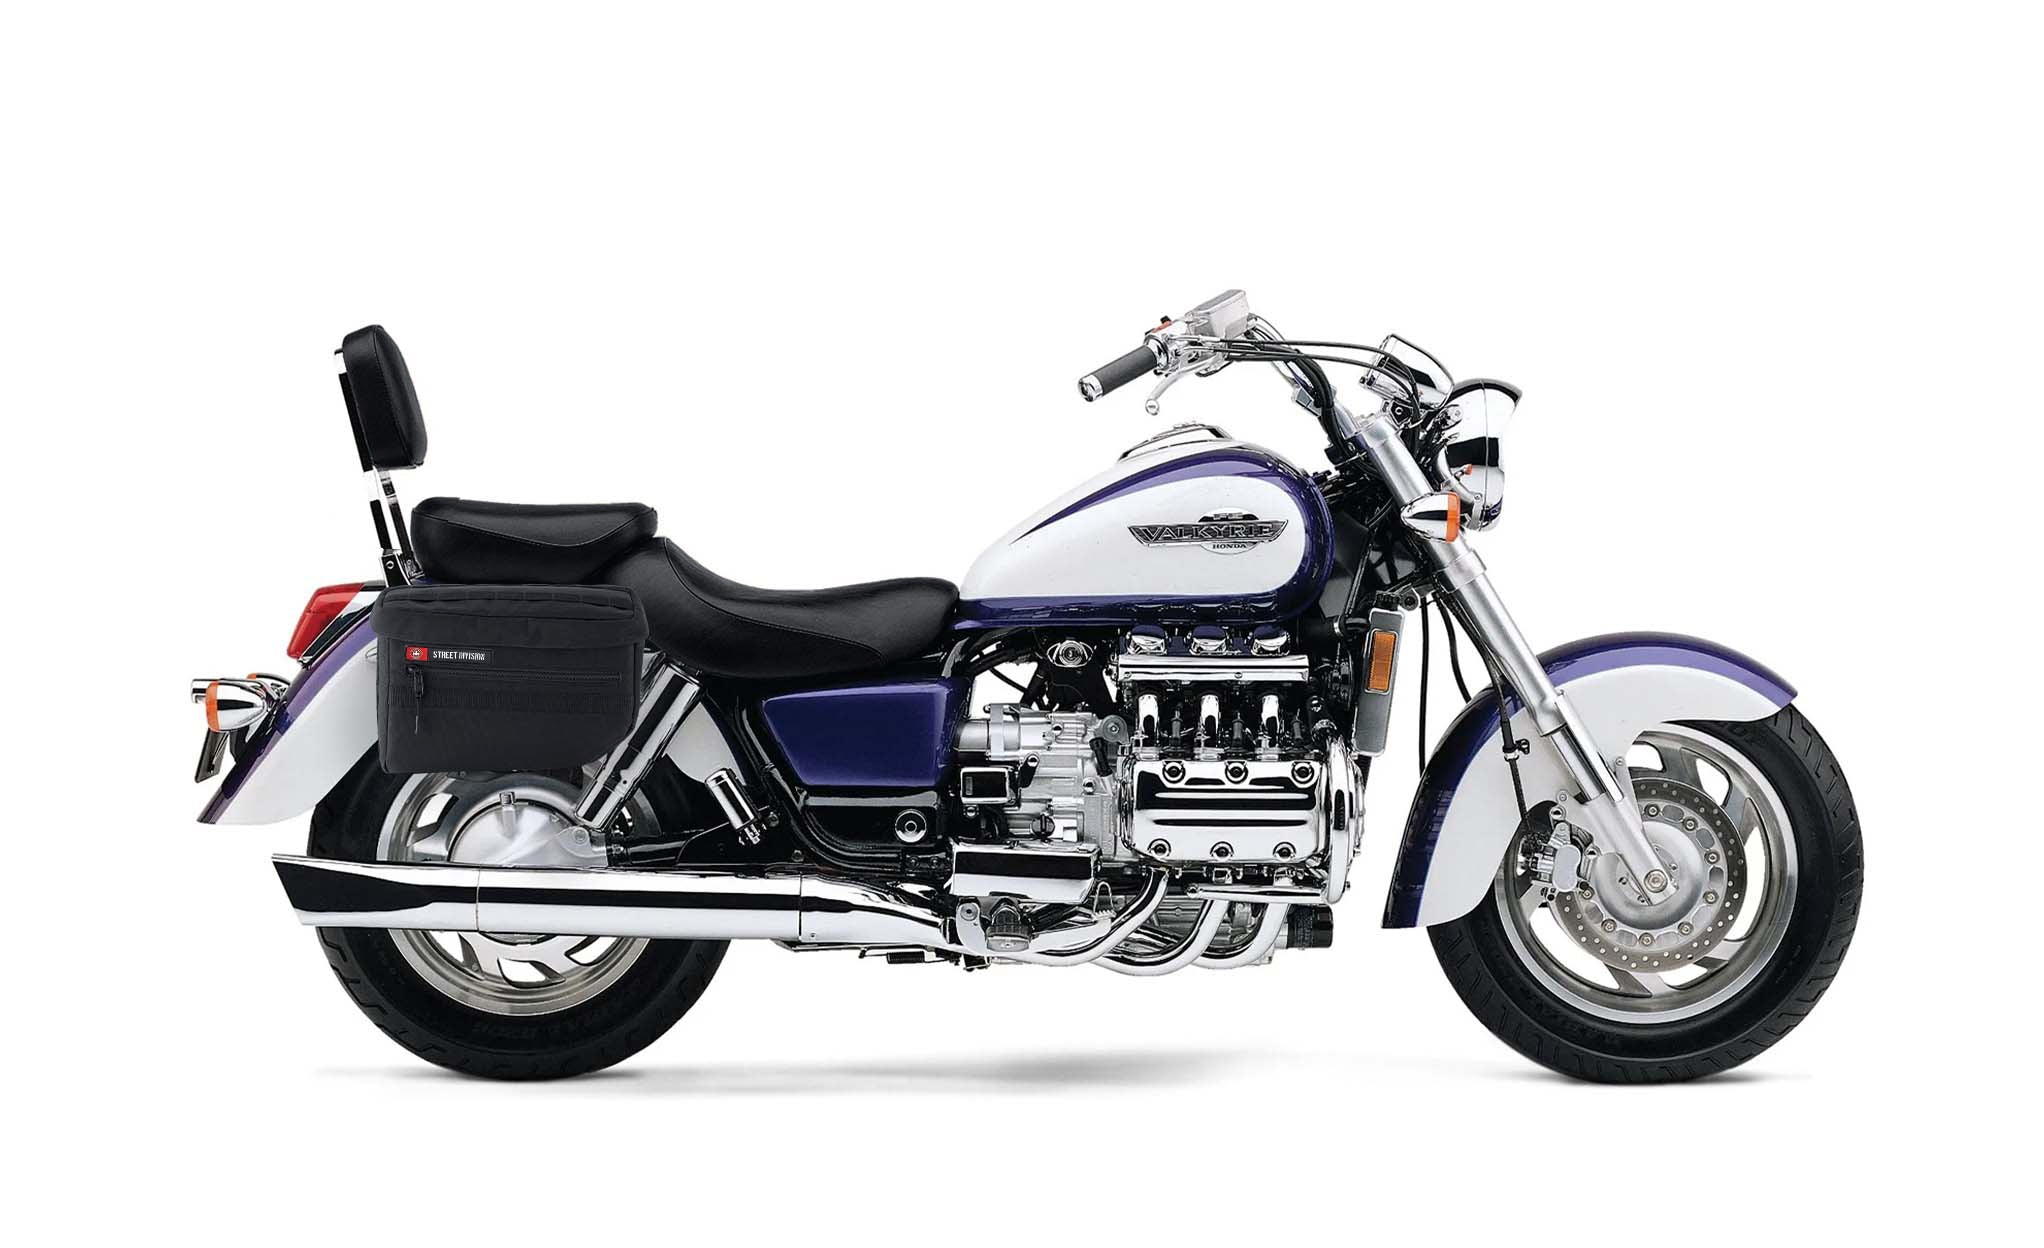 Viking Patriot Large Honda 1500 Valkyrie Interstate Motorcycle Throw Over Saddlebags on Bike Photo @expand